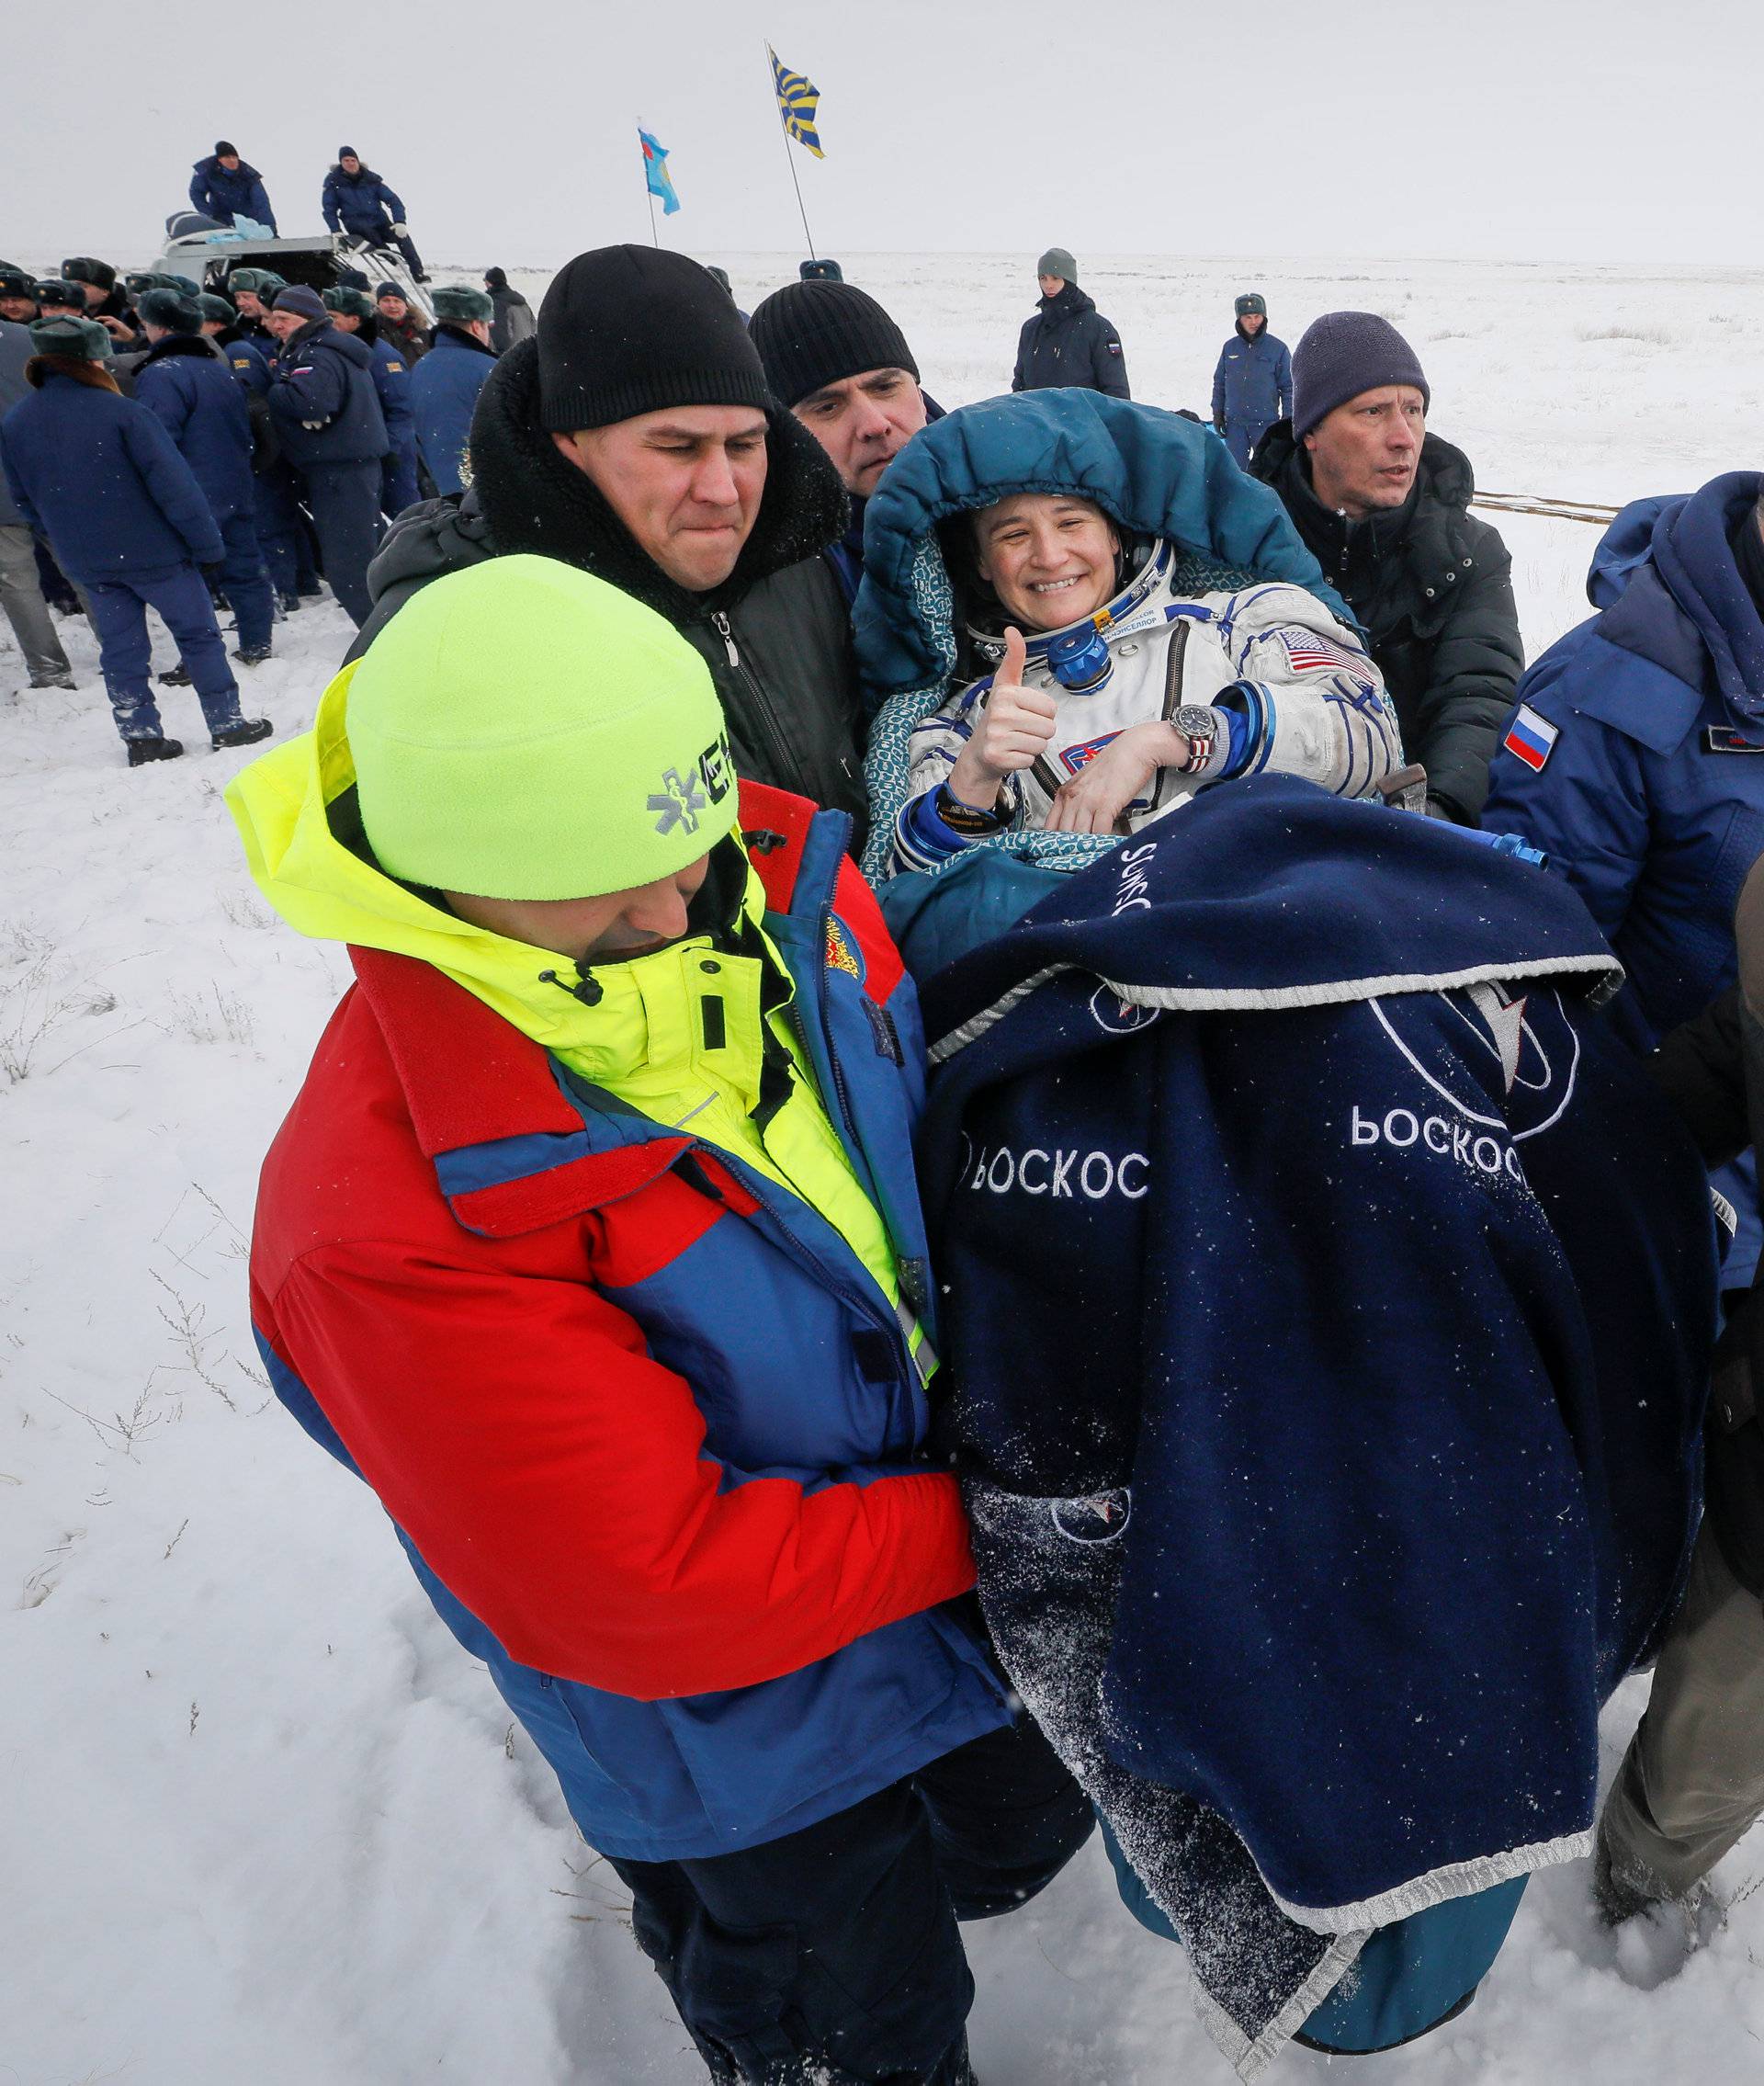 Ground personnel carry International Space Station crew member Aunon-Chancellor after landing near Zhezkazgan